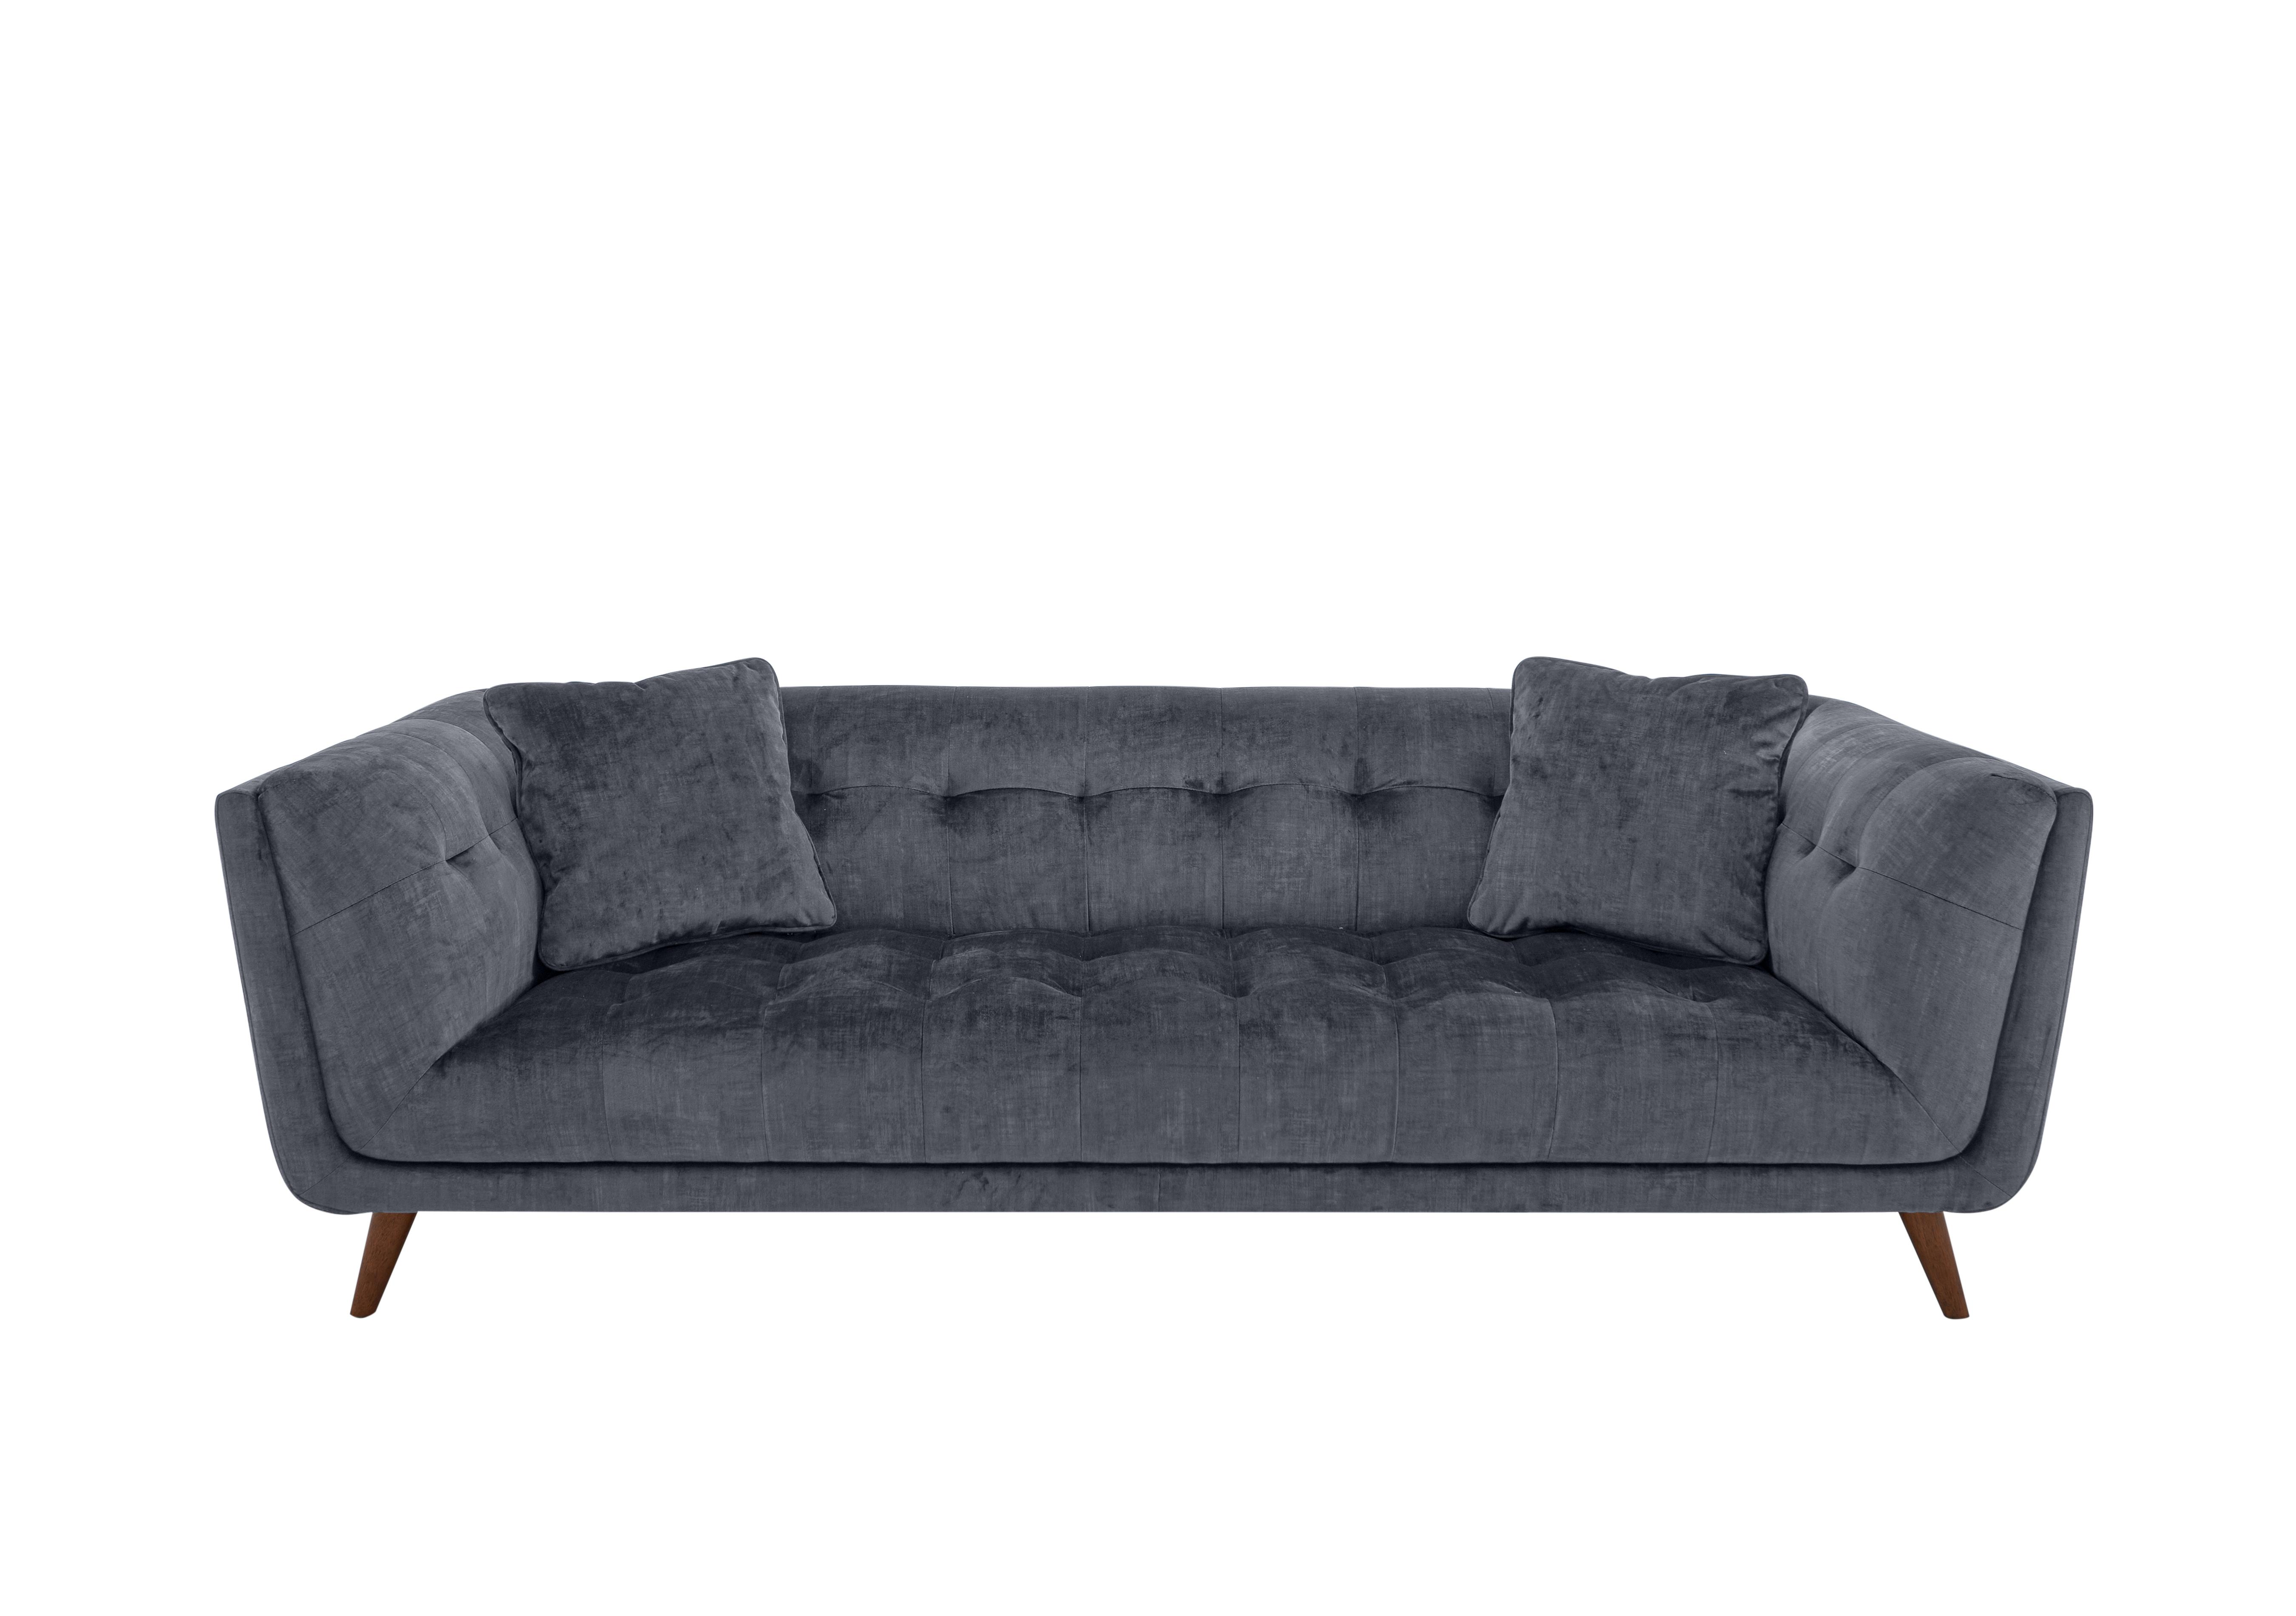 Rene 3 Seater Fabric Sofa in 52001 Heritage Granite Wa Ft on Furniture Village